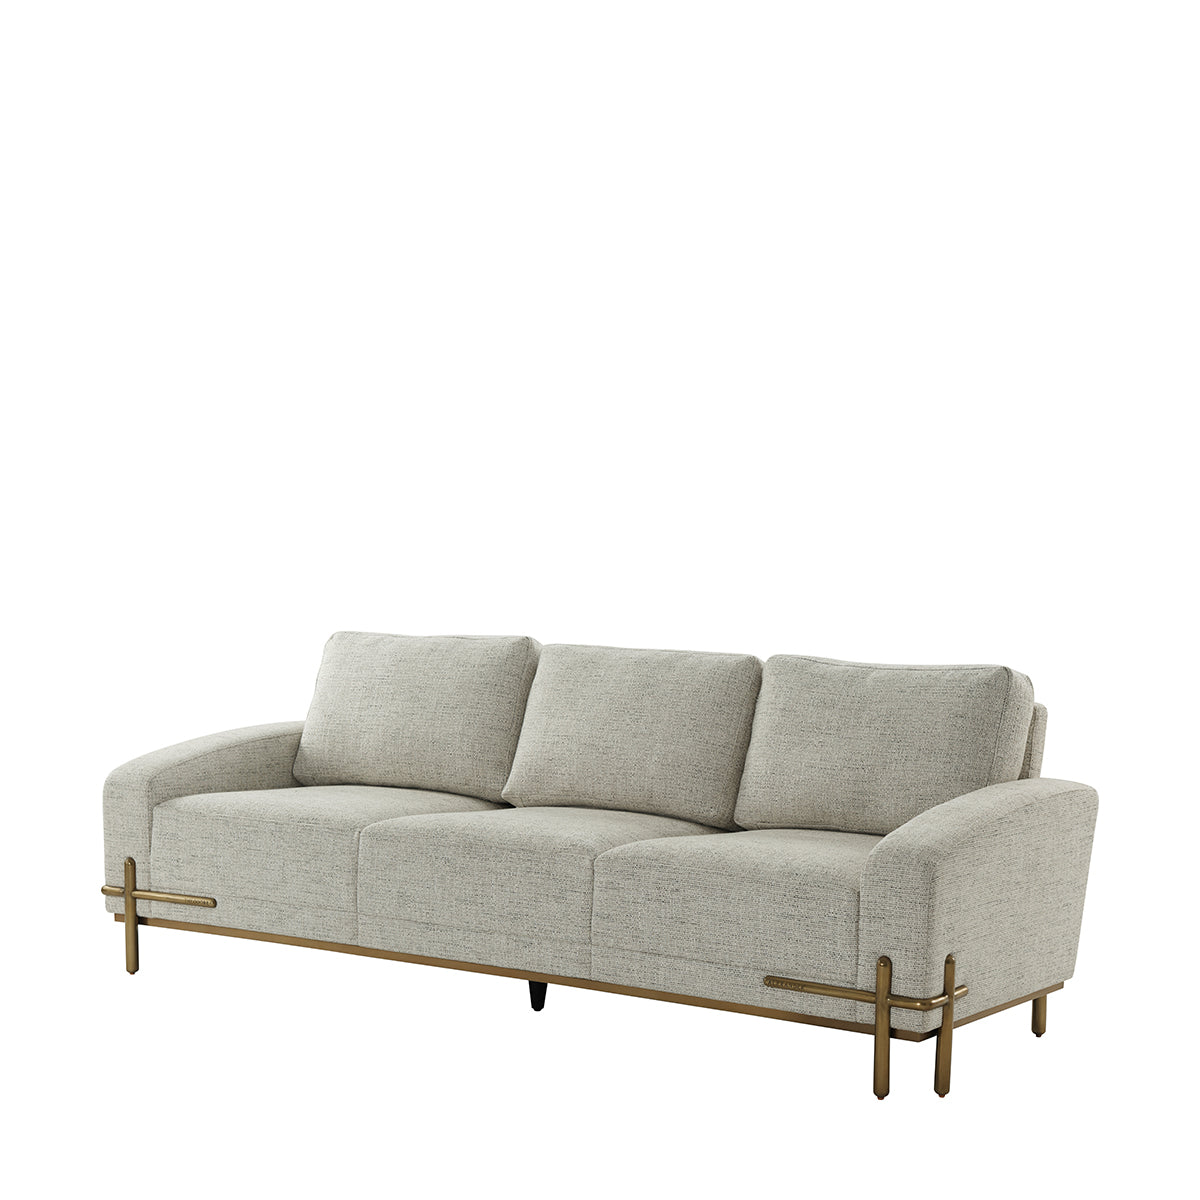 theodore alexander iconic upholstered sofa loveseats & sofas 